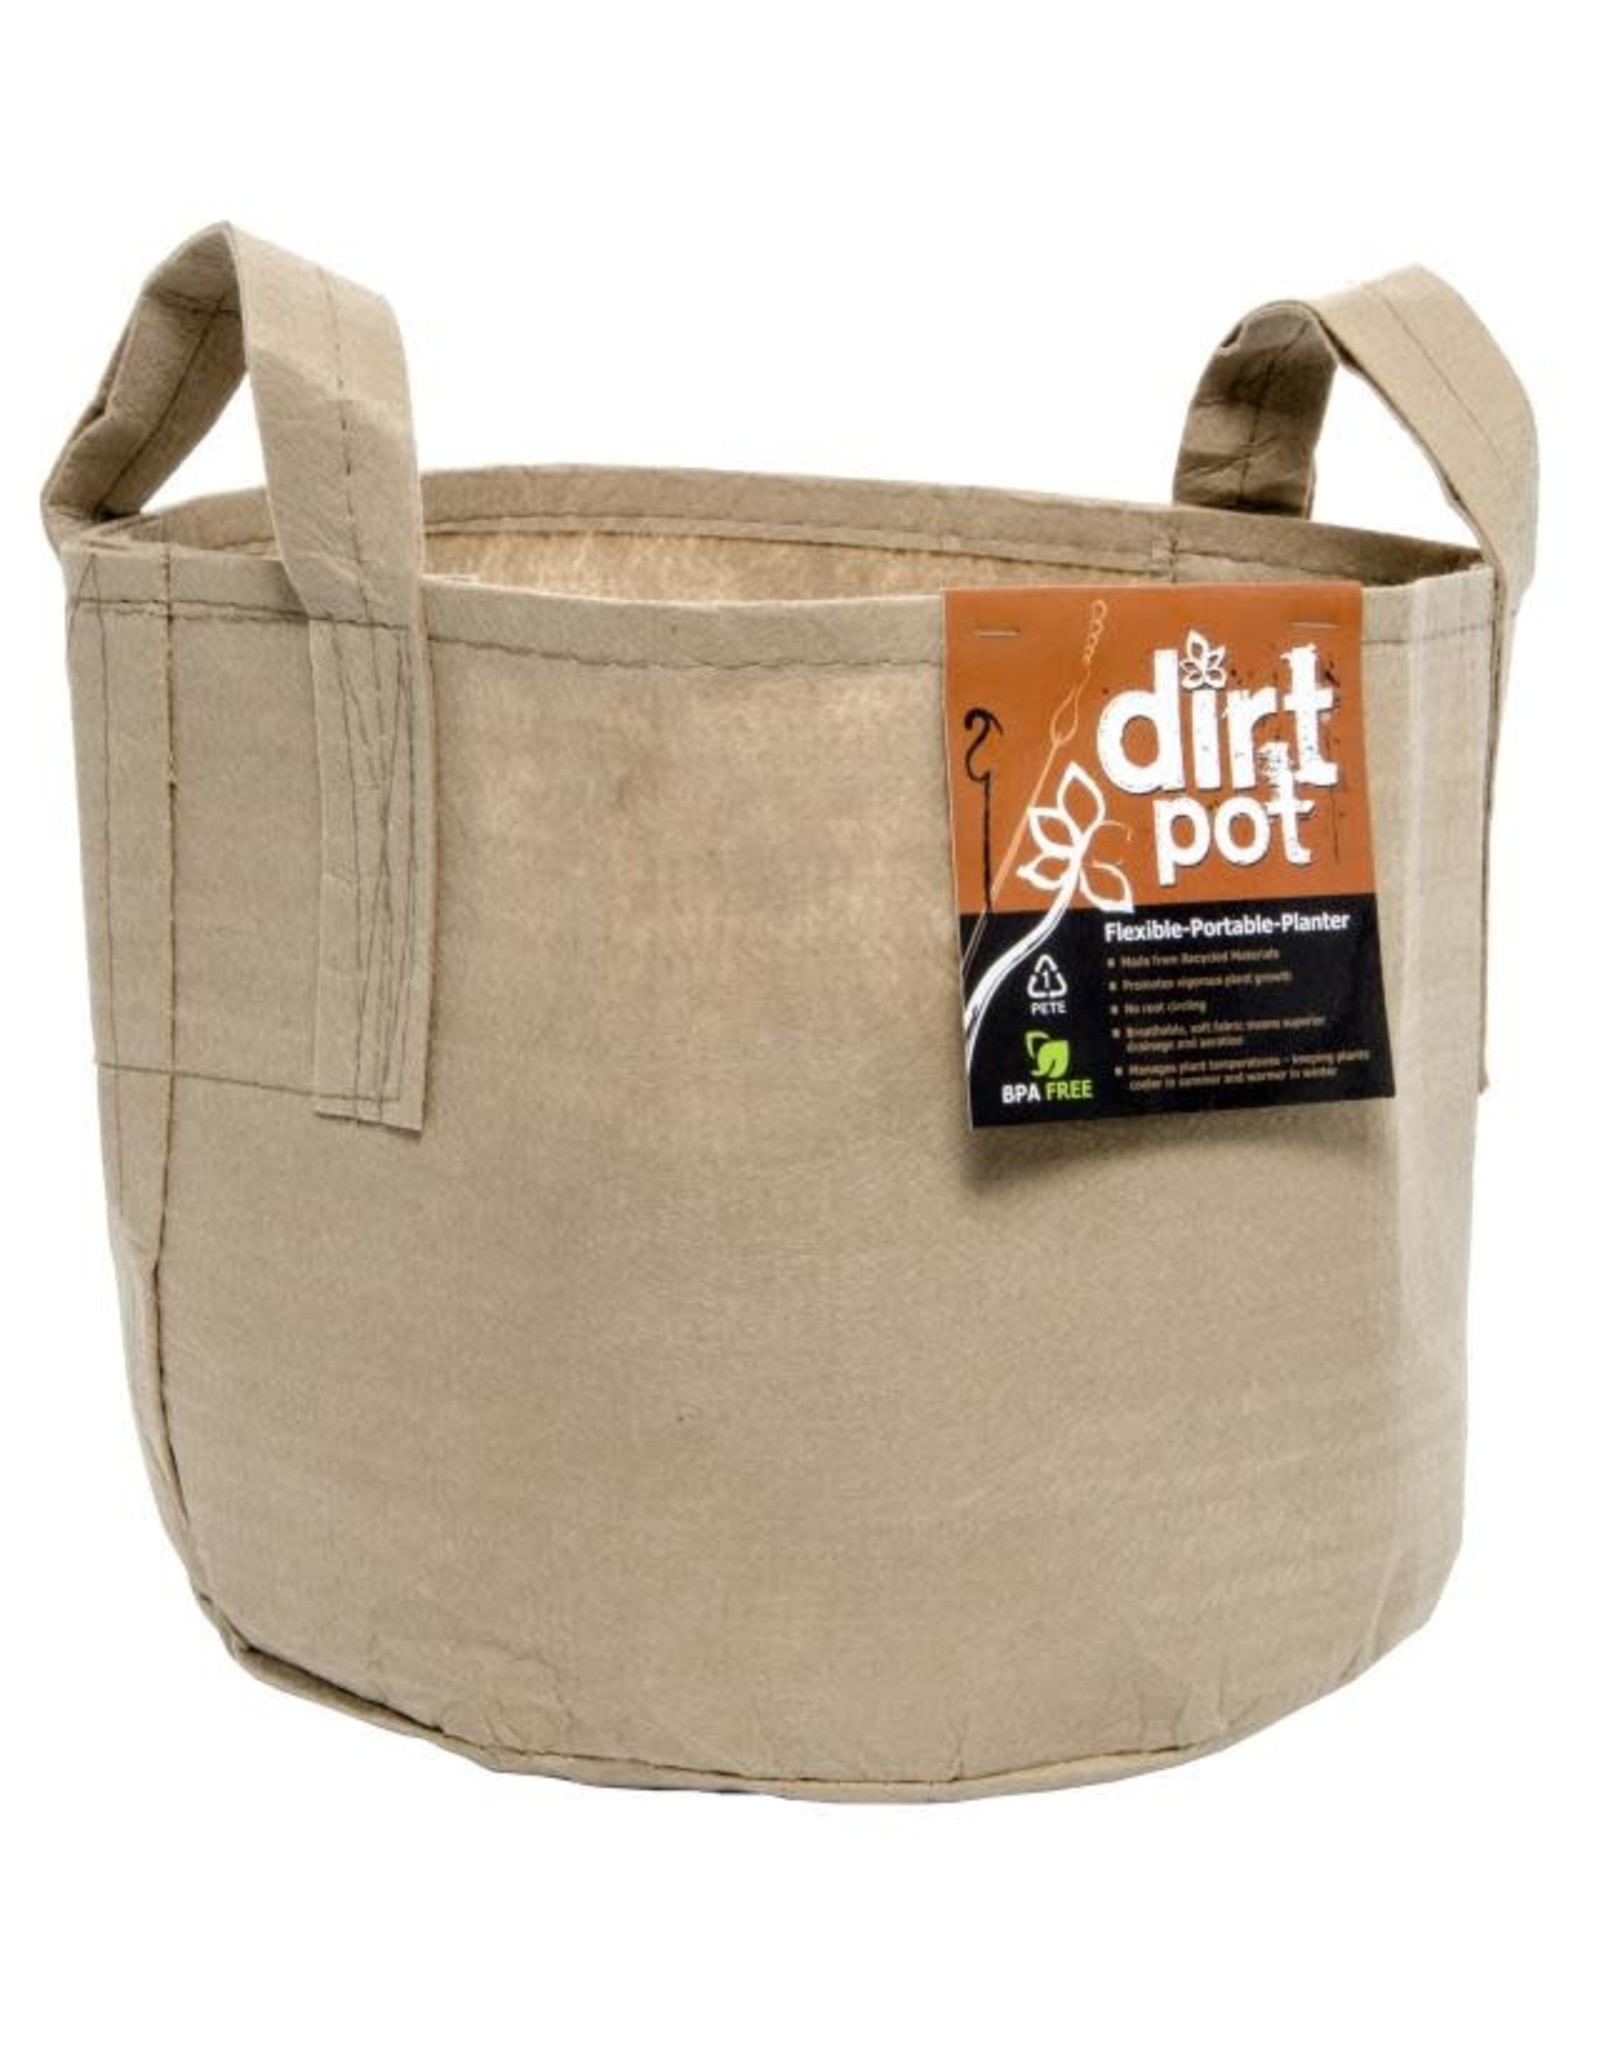 Dirt Pot Dirt Pot Flexible Portable Planter, Tan, 100 gal, with handles